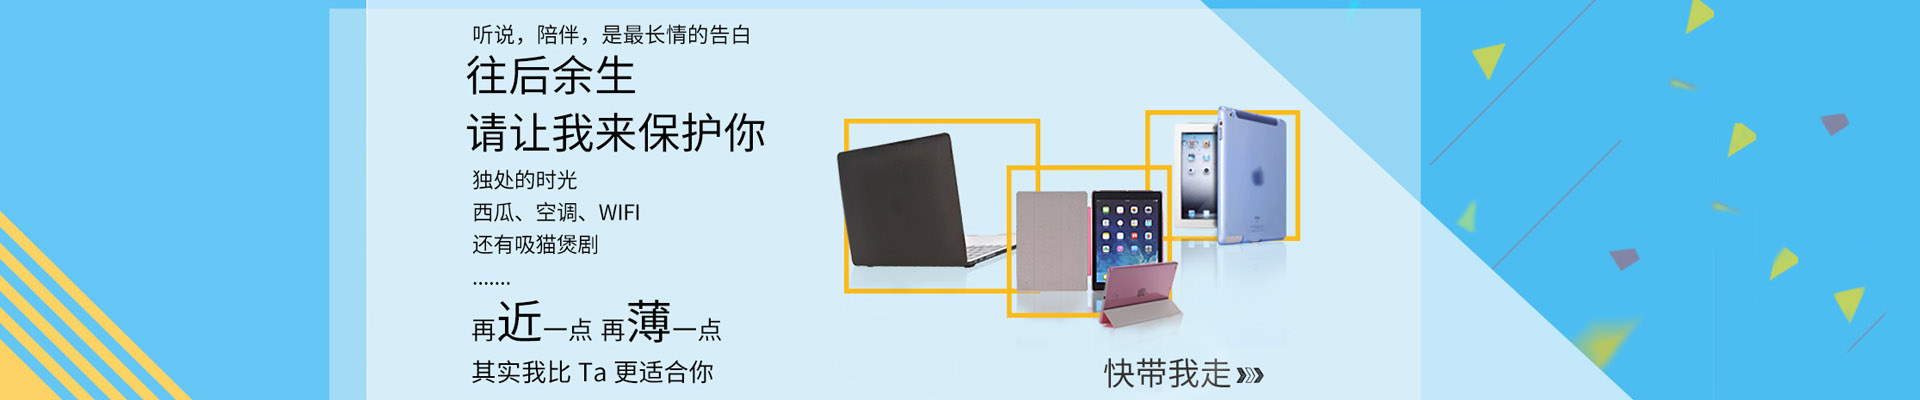 iPadair全包保护壳-PC款-东莞市成康电子有限公司